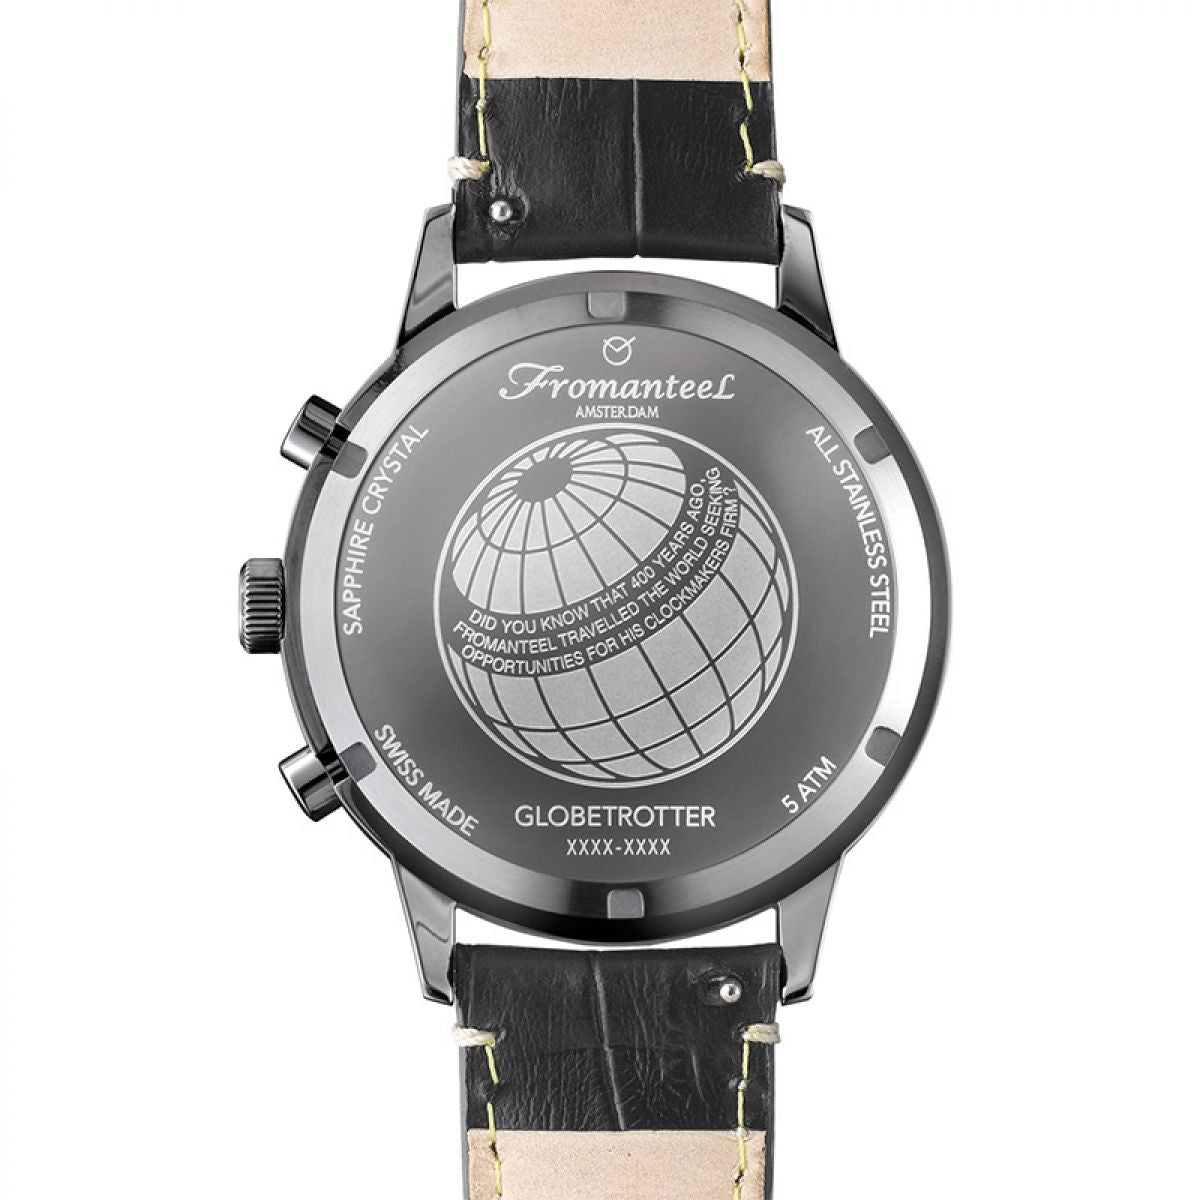 Refurbished Fromanteel Globetrotter Chrono GT-0702-001 Heren Horloge 42mm